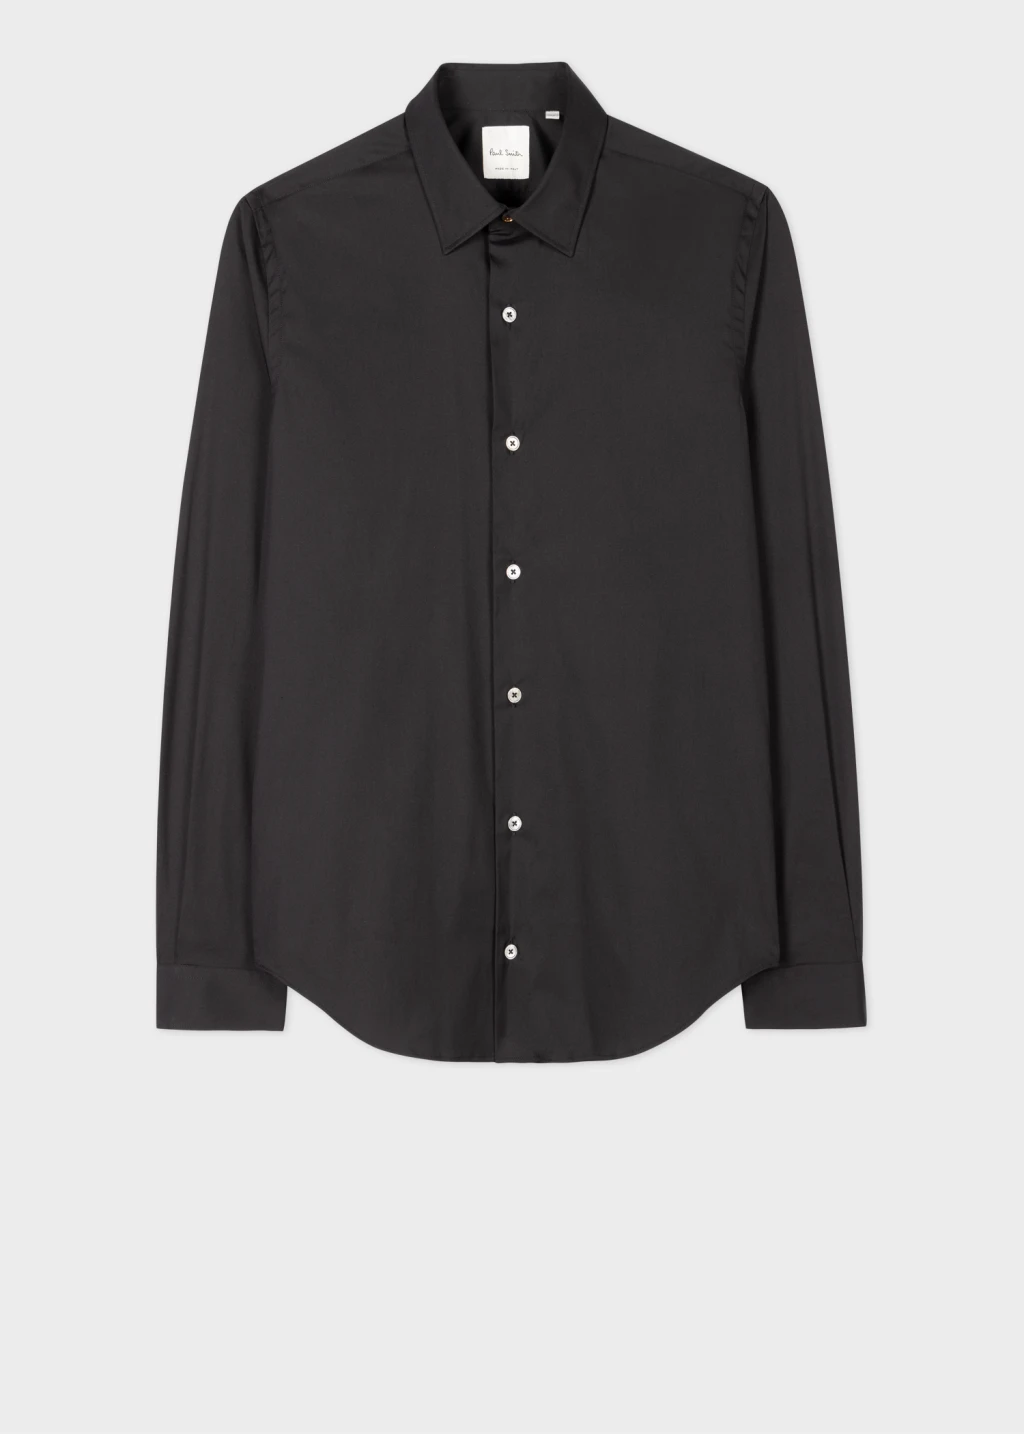 T-shirt SLIM PUSH UP K117 black MITARE Size S Color Black